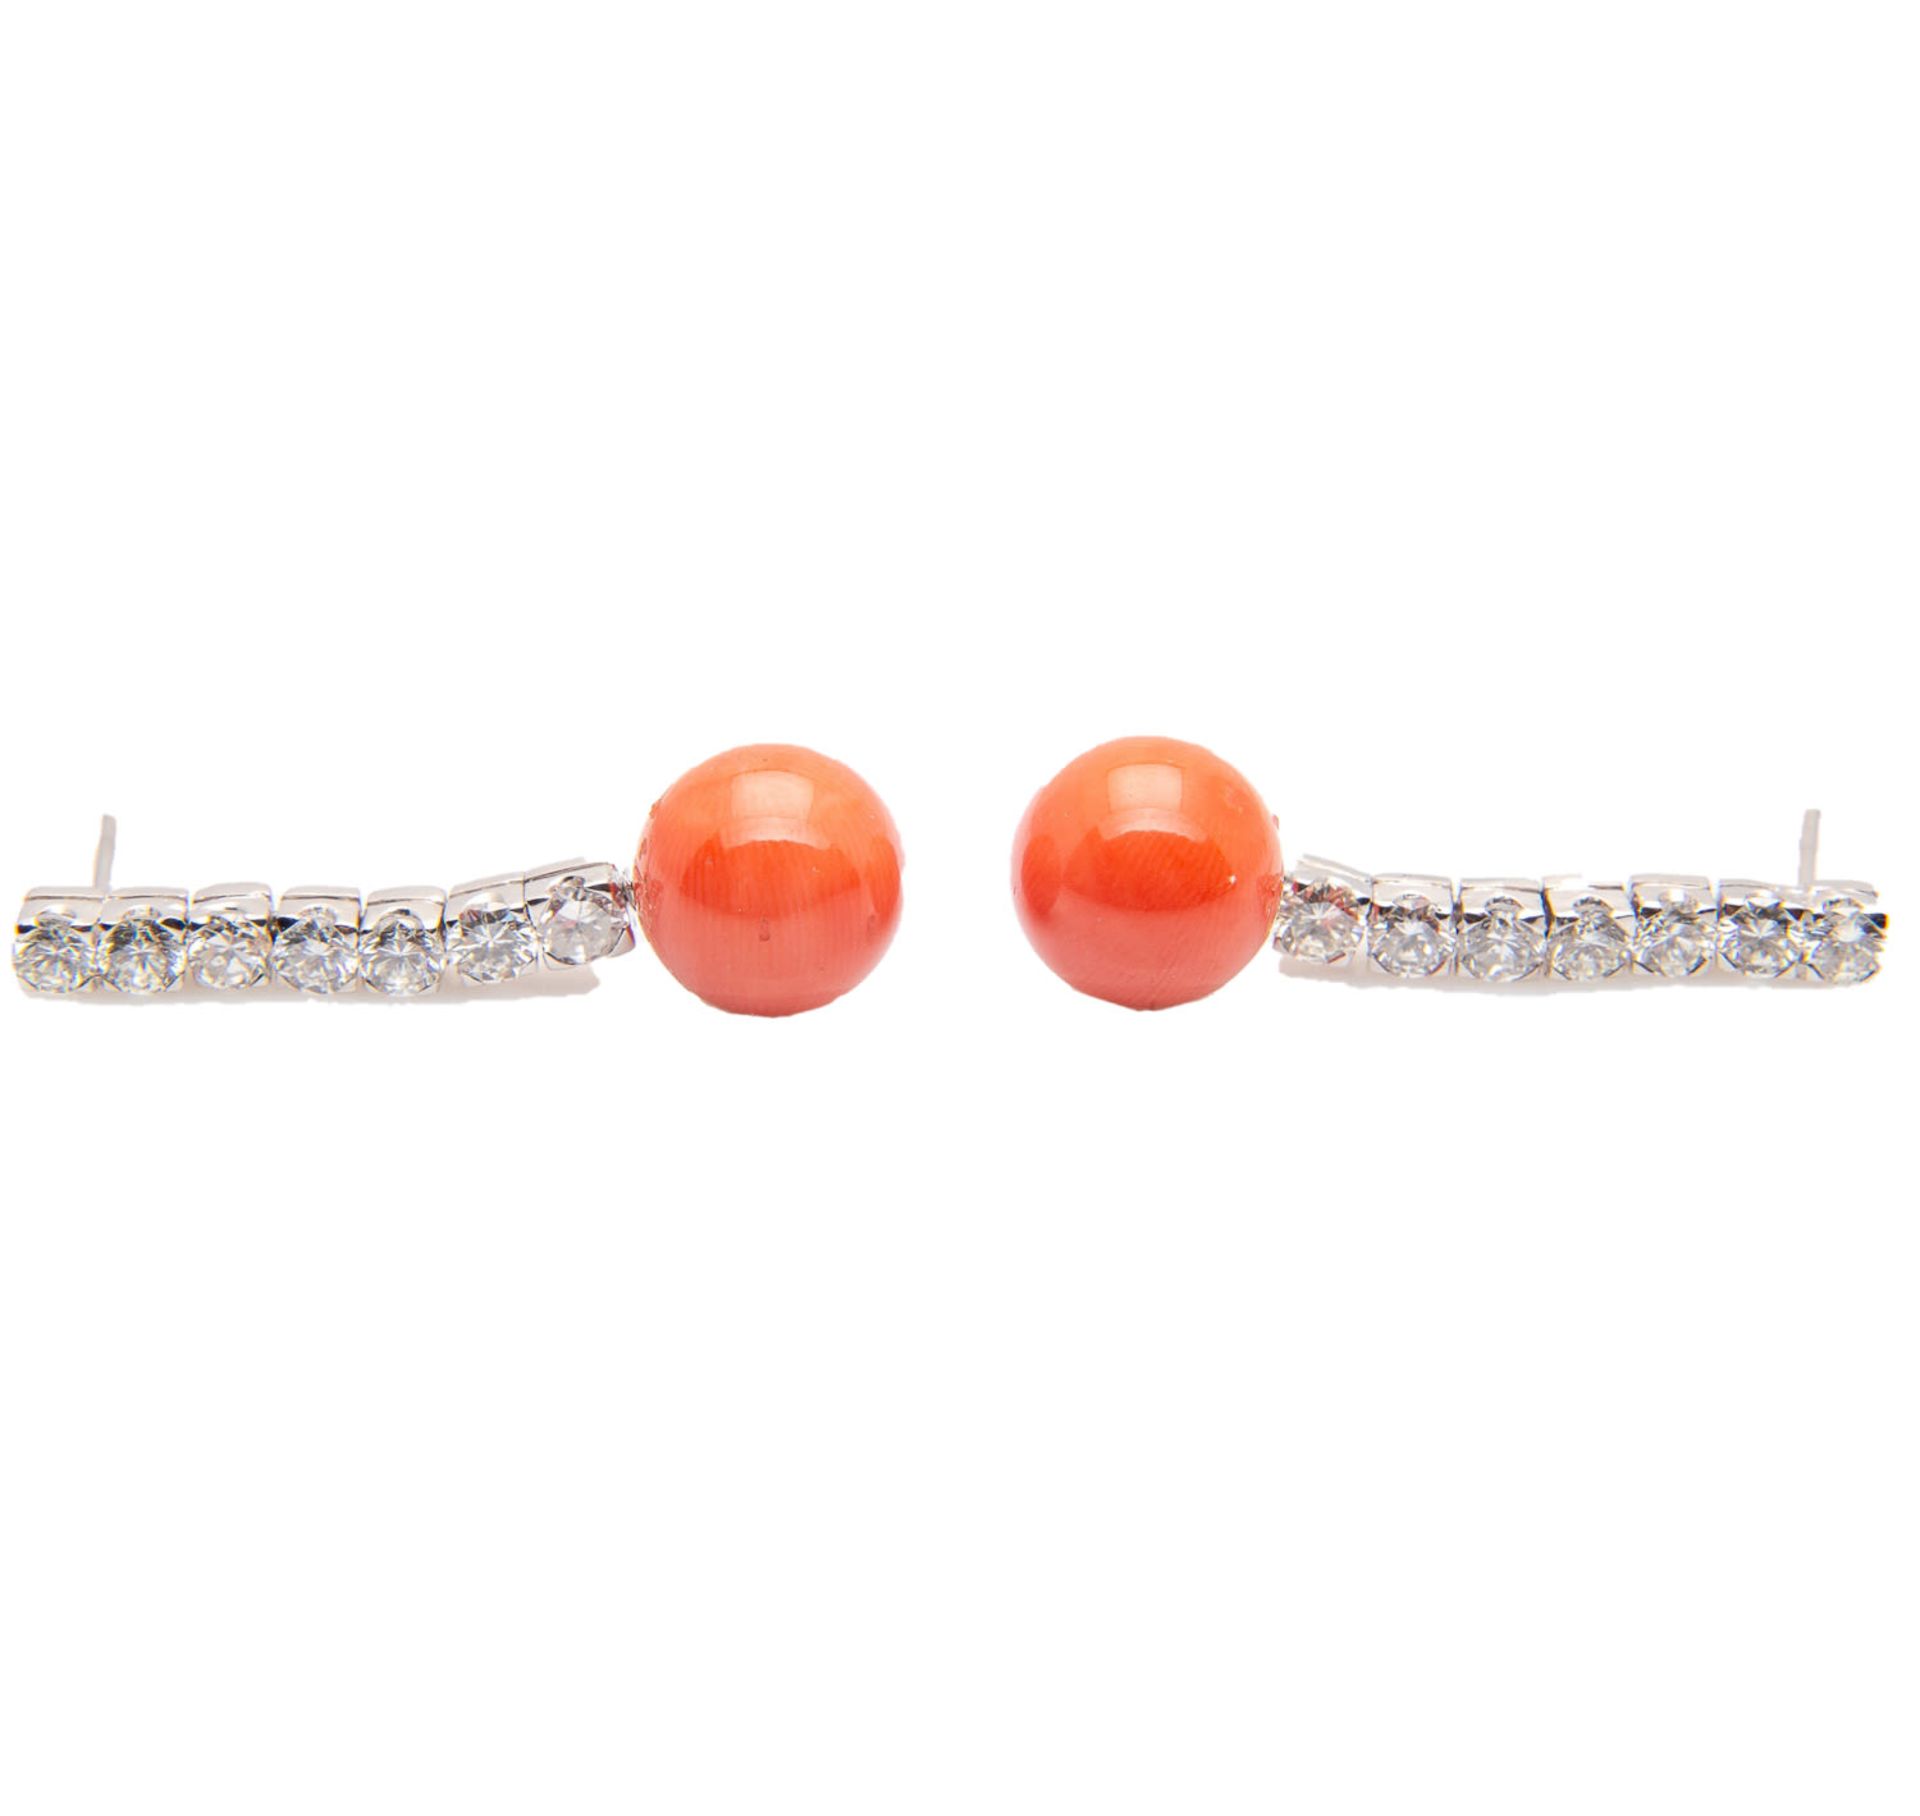 Elegant pair of teardrop earrings in red coral and diamonds of 1.50 ct in total - Image 9 of 9